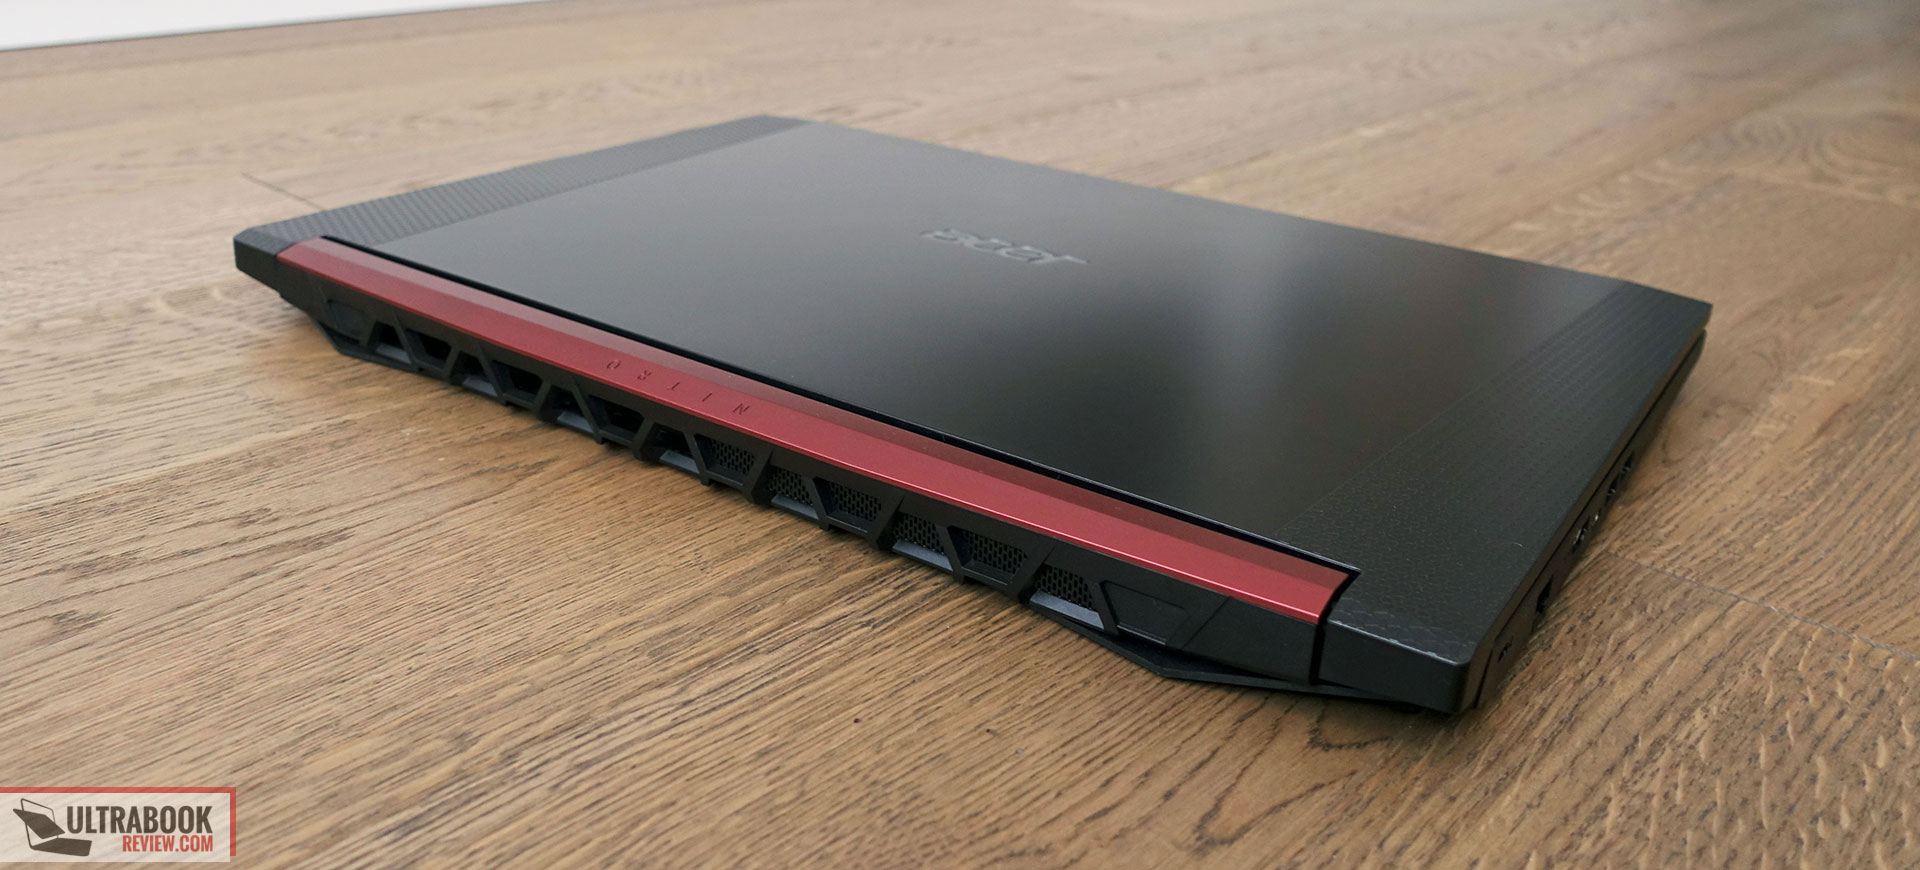 Acer Nitro 5 review (AN517-51 17-inch model - i7-9750H, GTX 1660Ti)